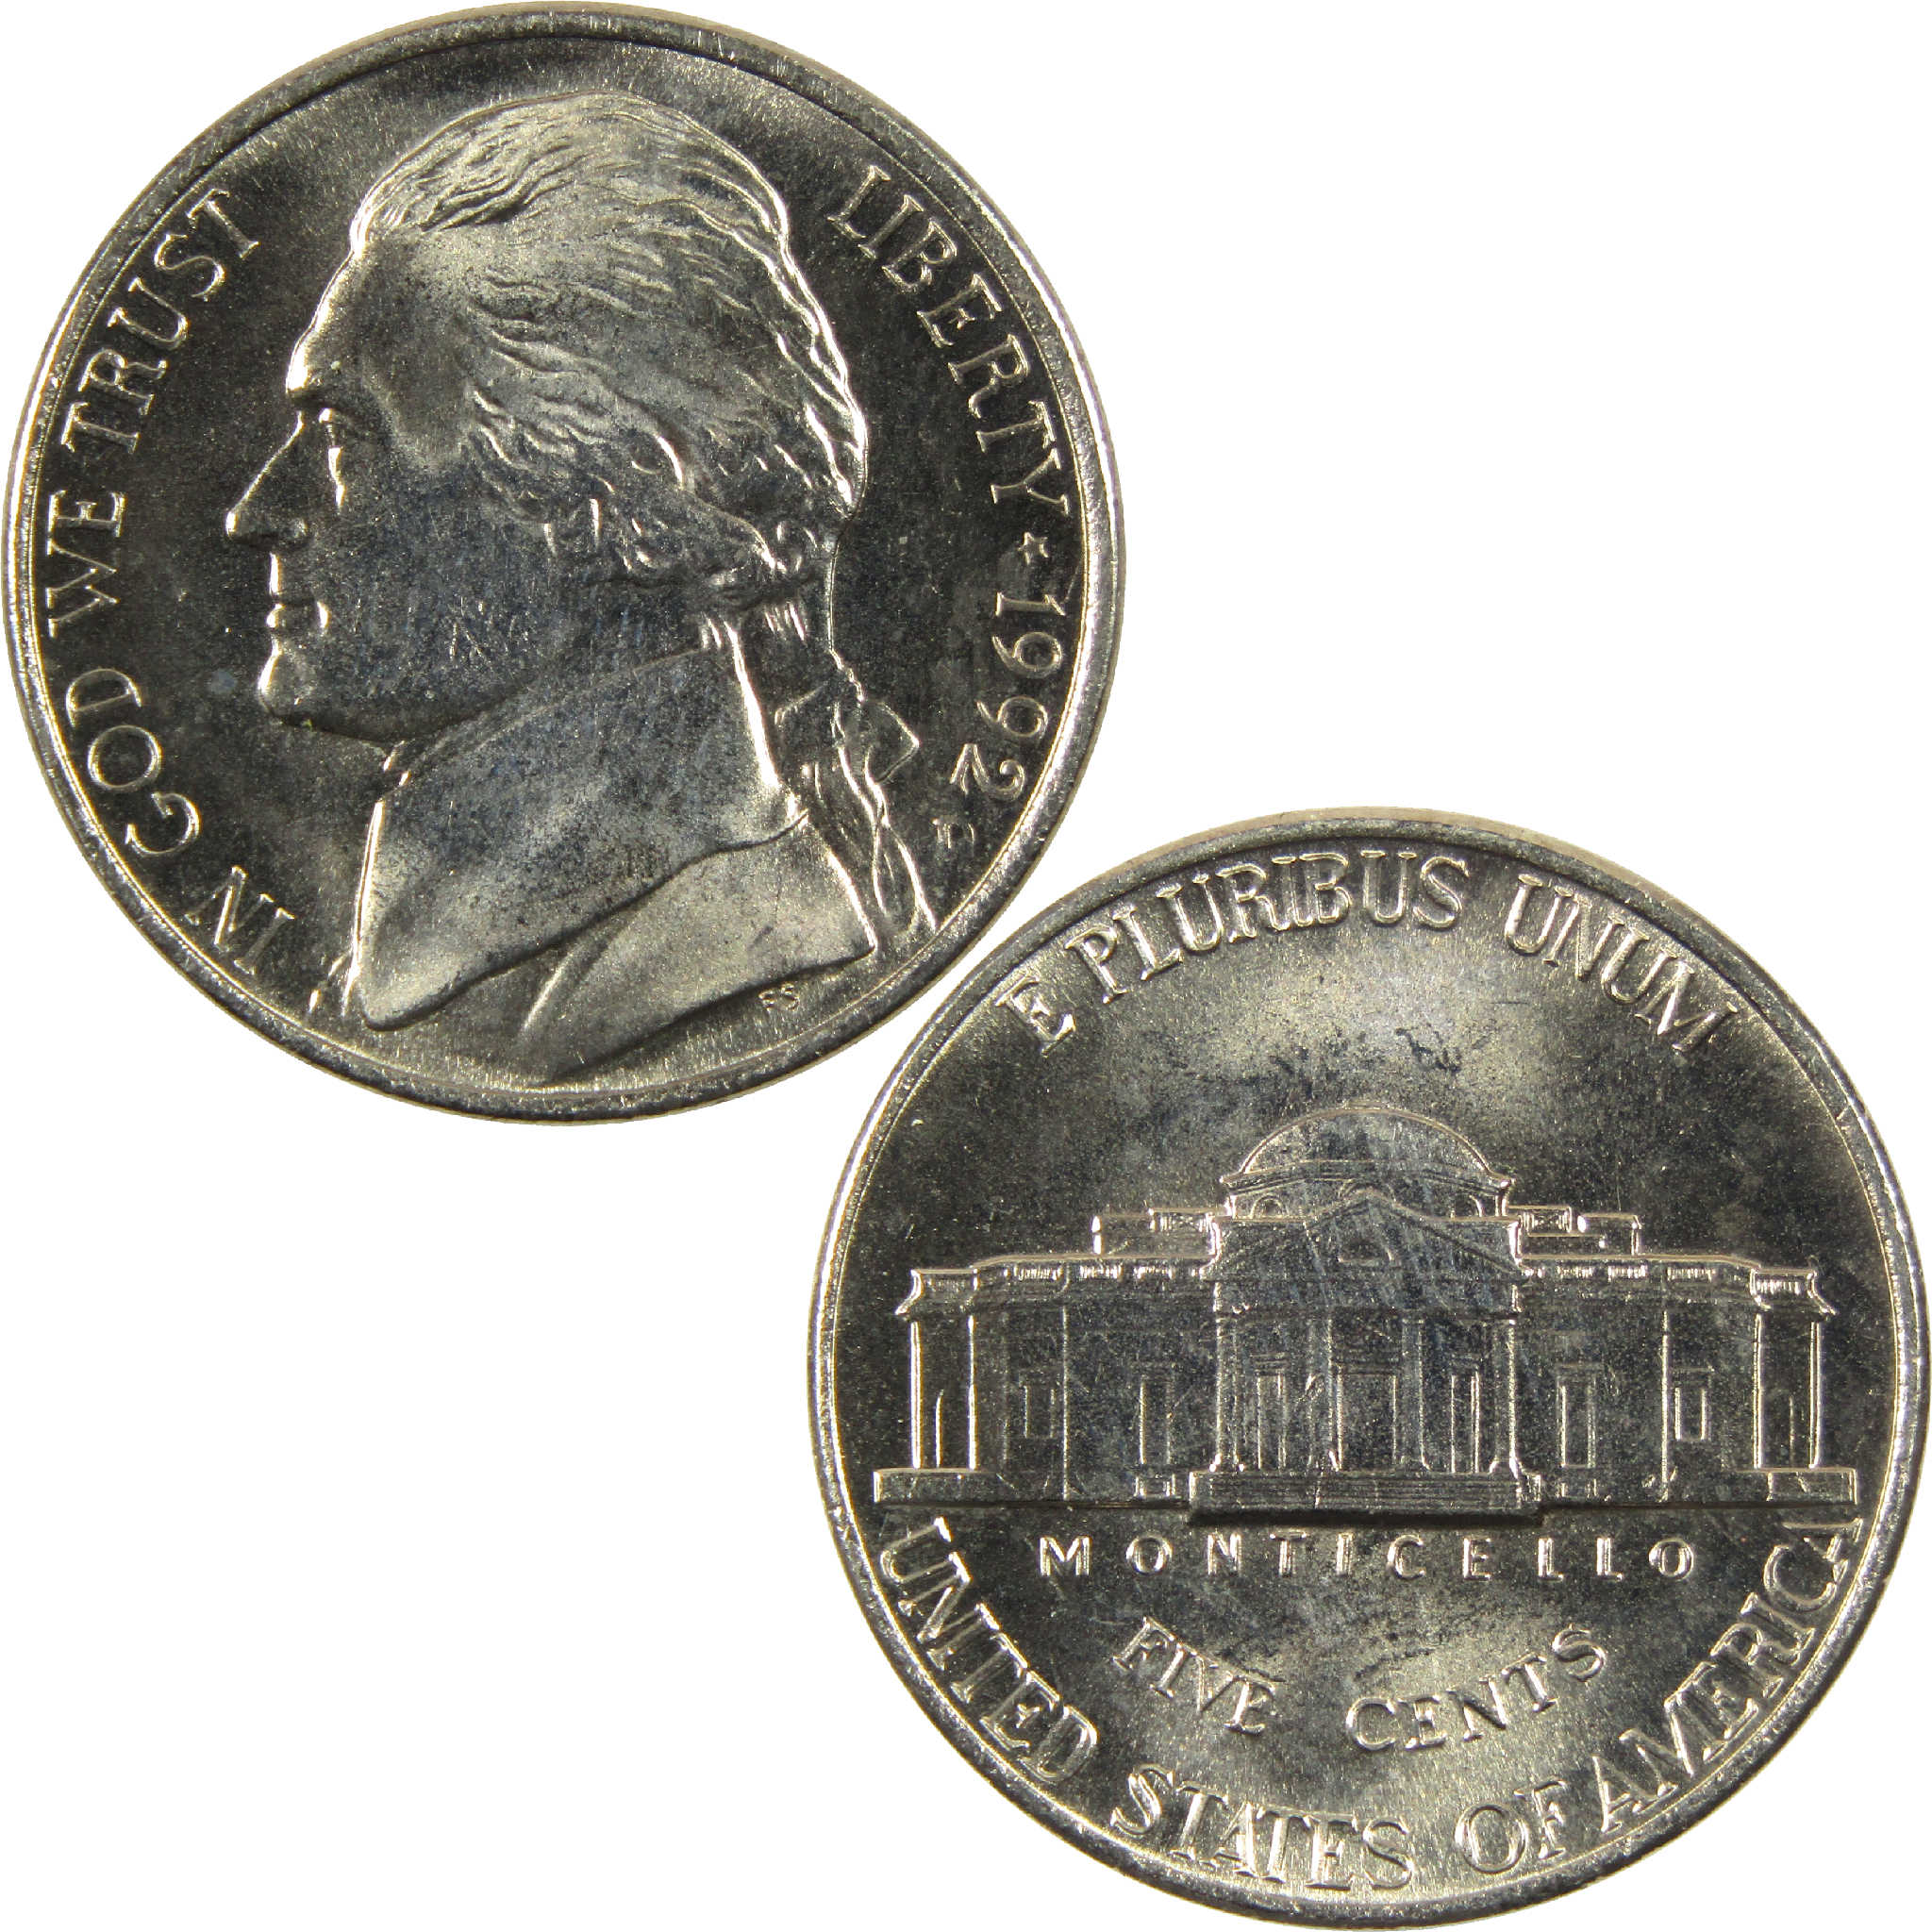 1992 D Jefferson Nickel BU Uncirculated 5c Coin